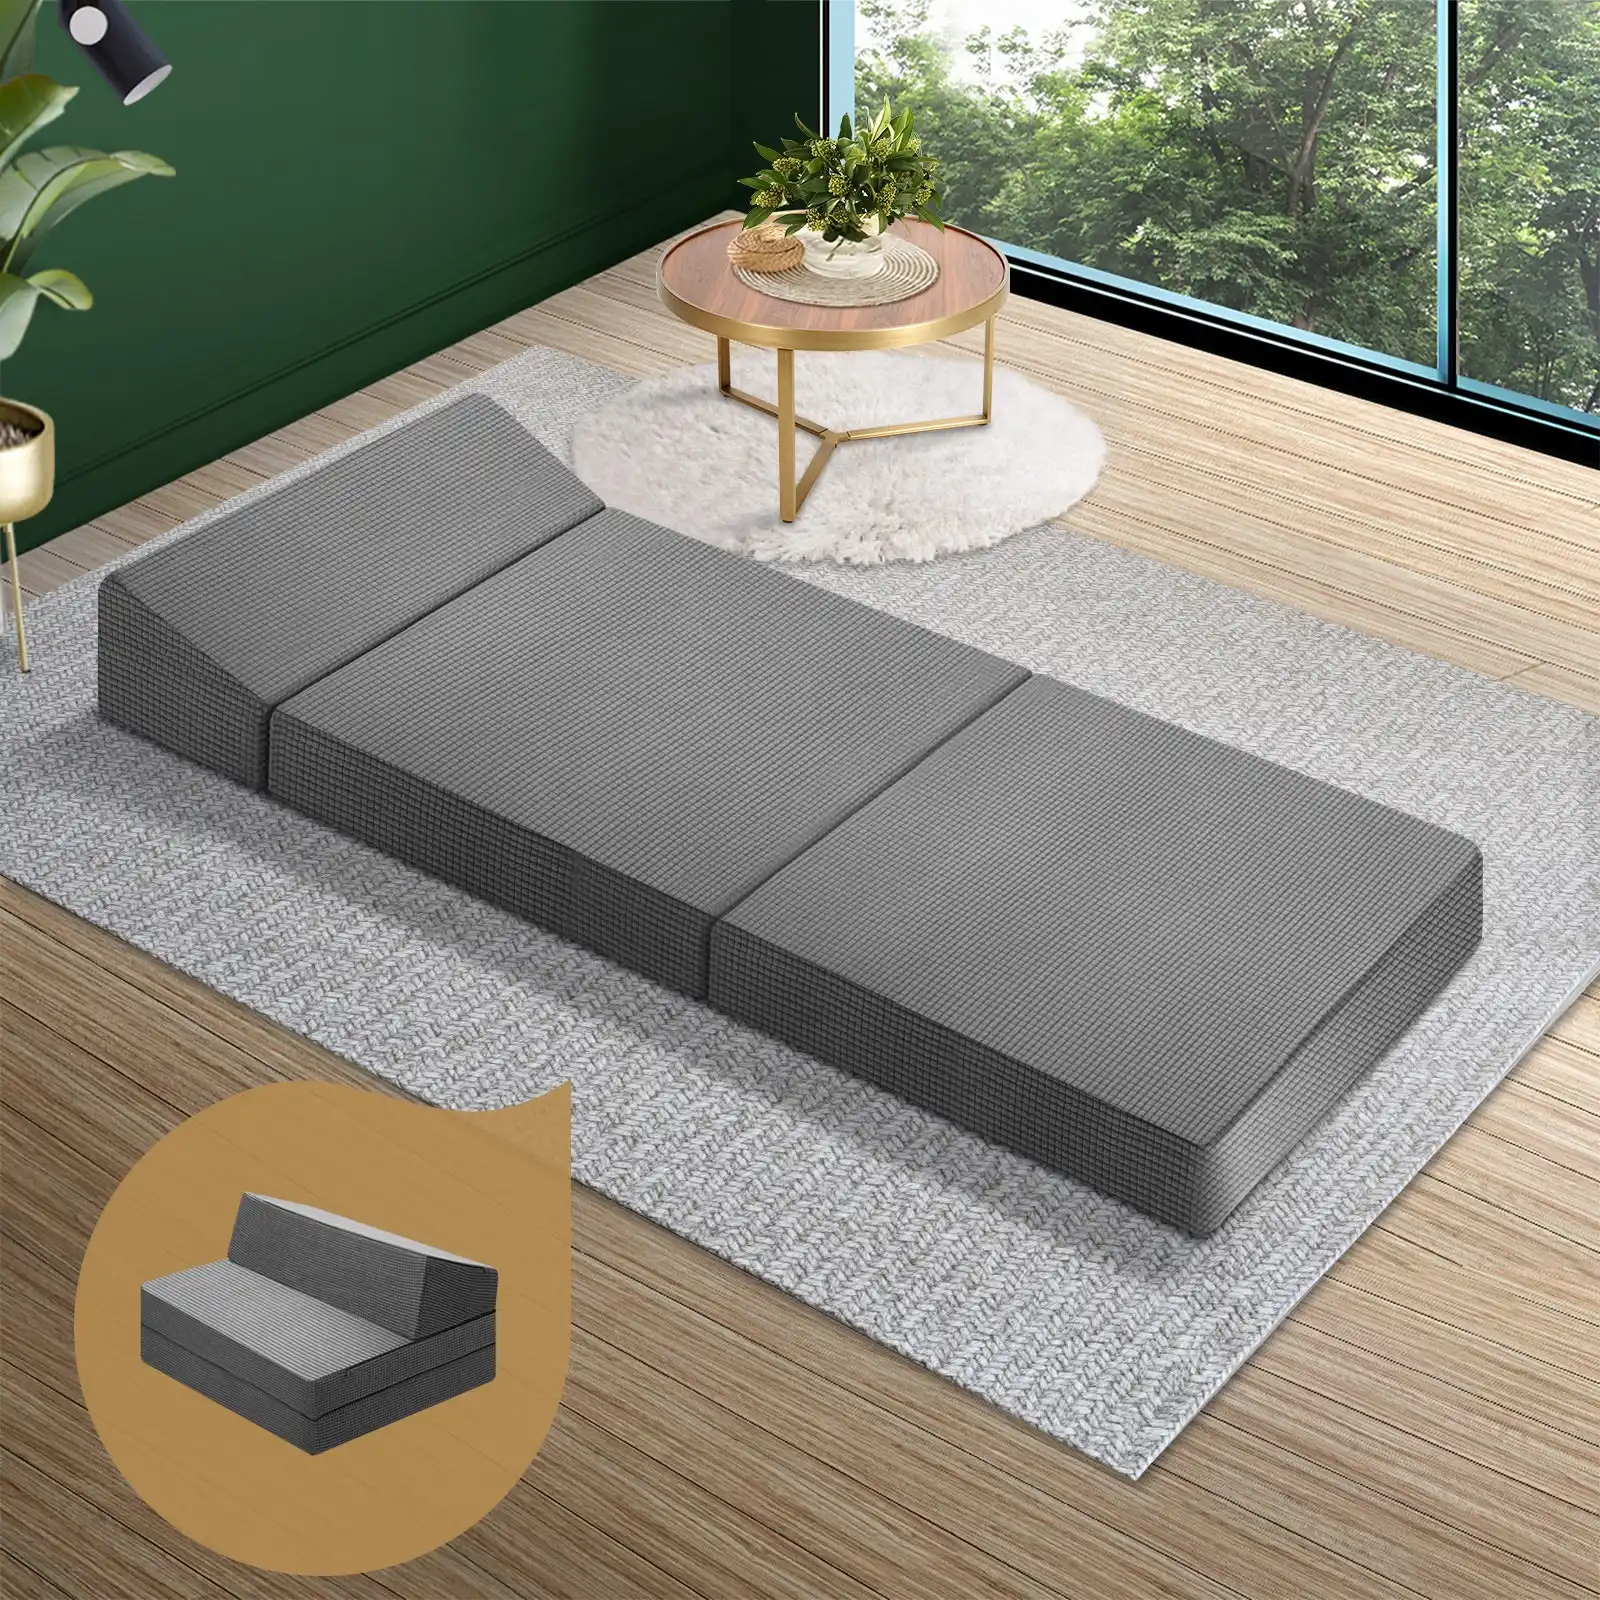 Bedra Foldable Mattress Folding Sofa Bed Trifold Sleeping Camping Cushion Single